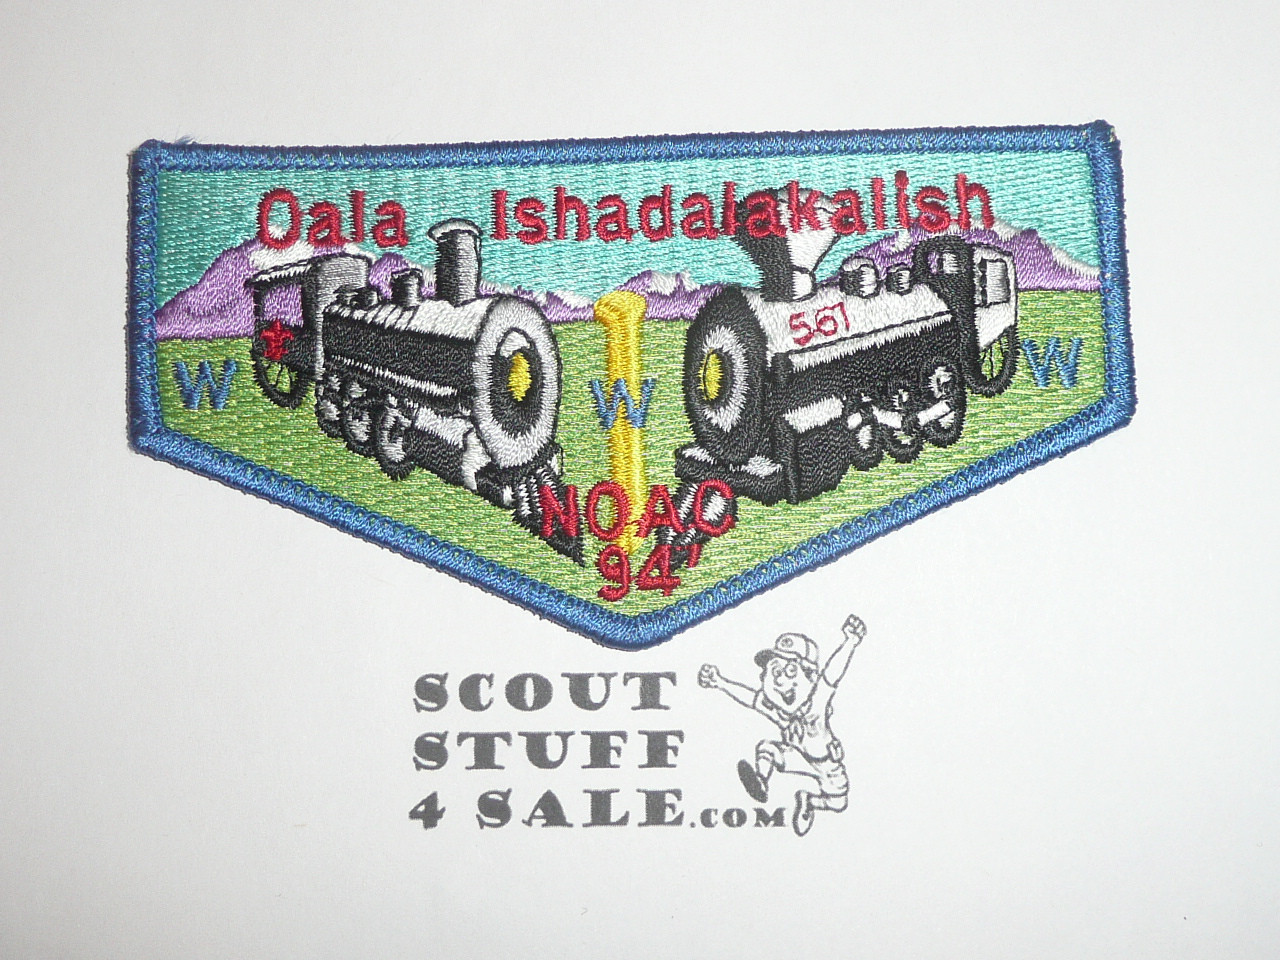 Order of the Arrow Lodge #561 Oala Ishadalakalish s27 1994 NOAC Flap Patch